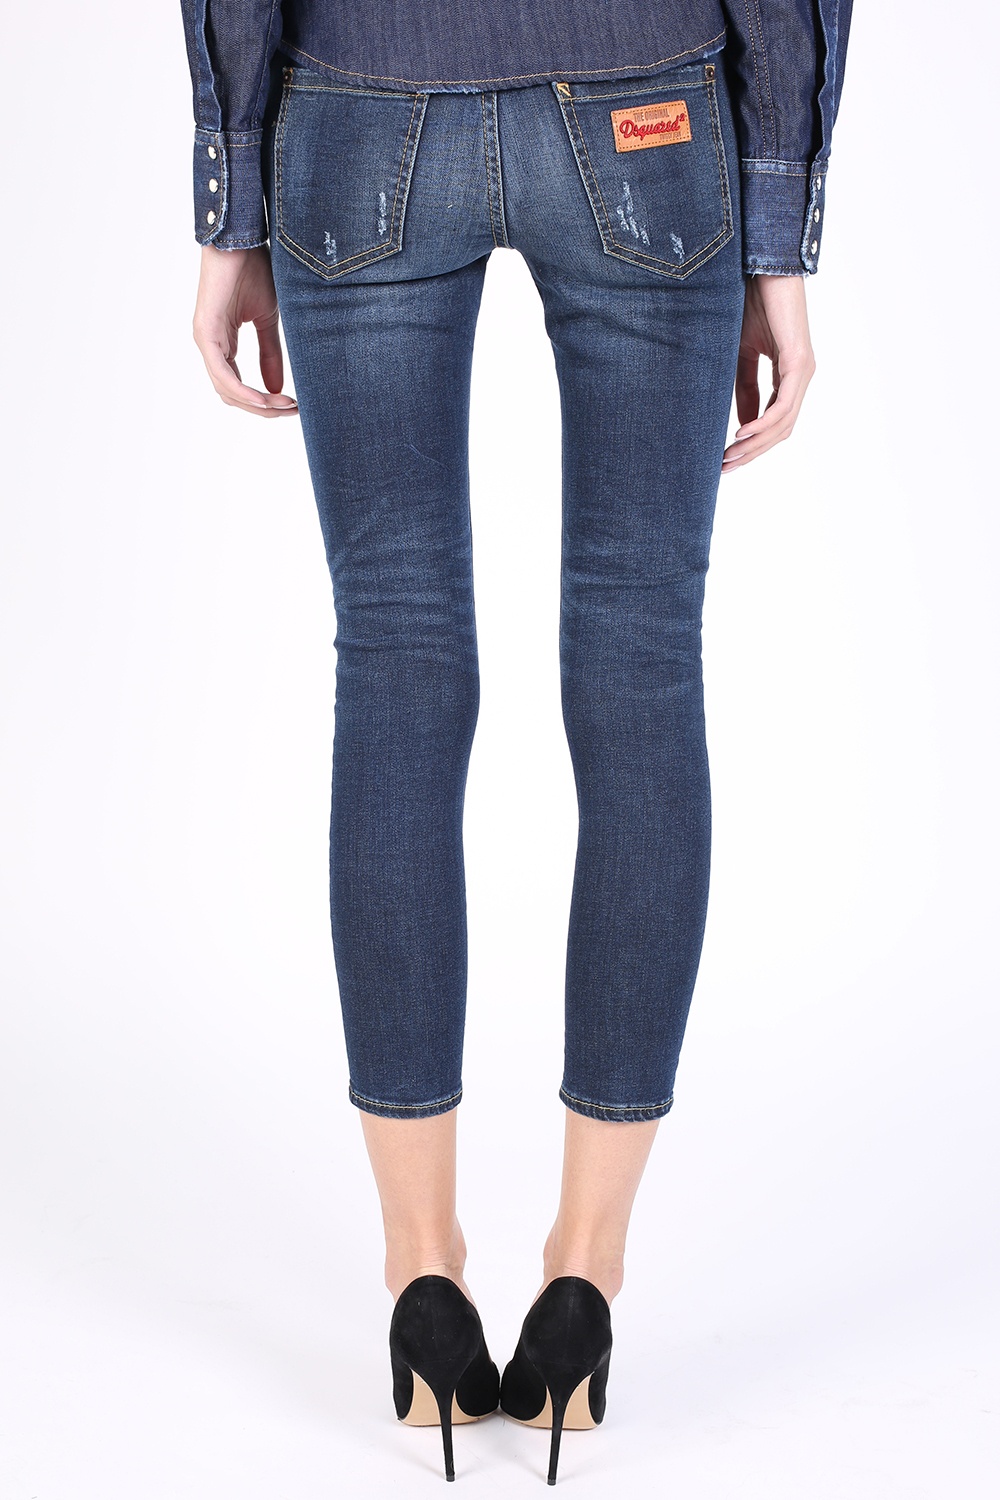 Dsquared2 'Medium Waist Cropped Twiggy Jean' jeans | Women's